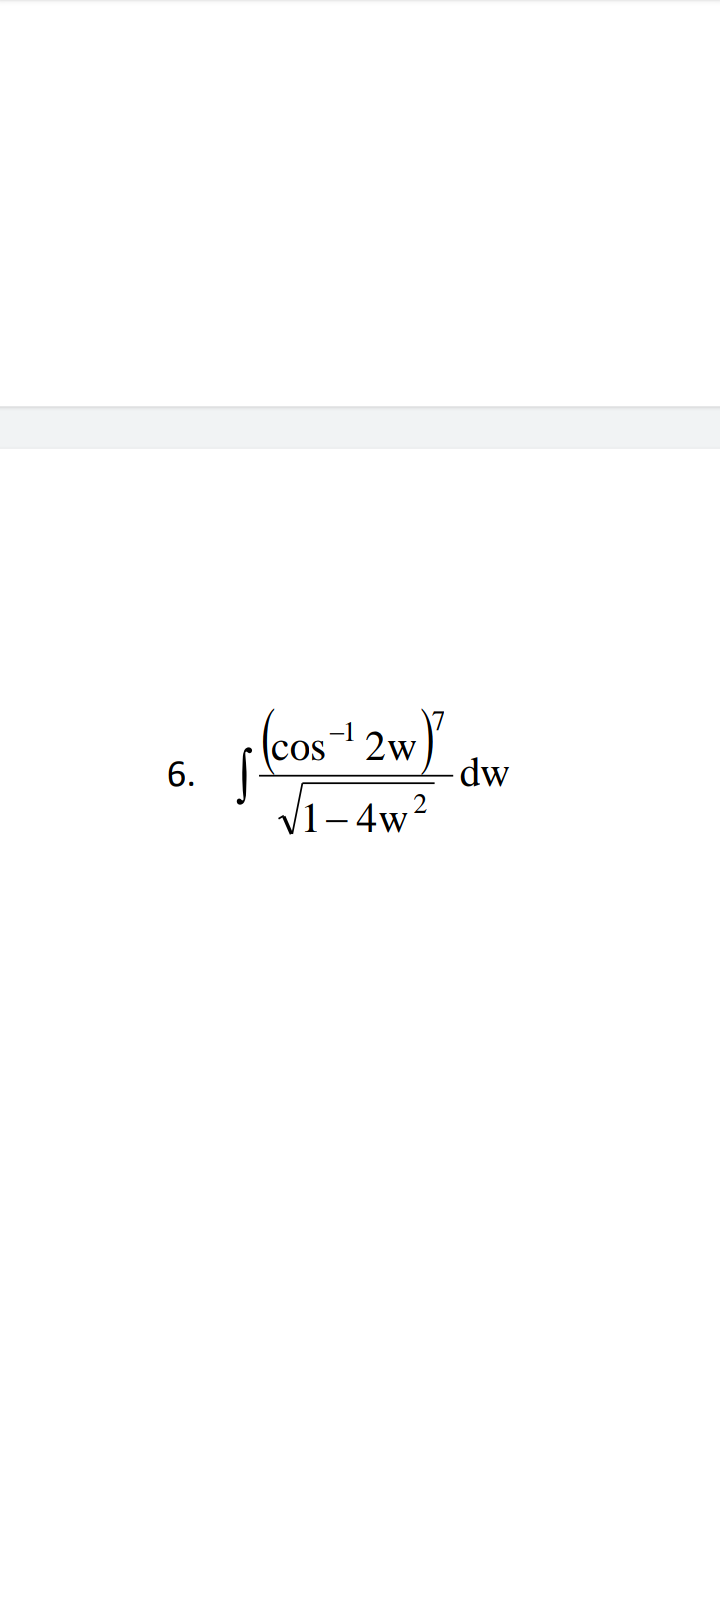 6.
(cos¹ 2w) du
dw
2
√1-4w²